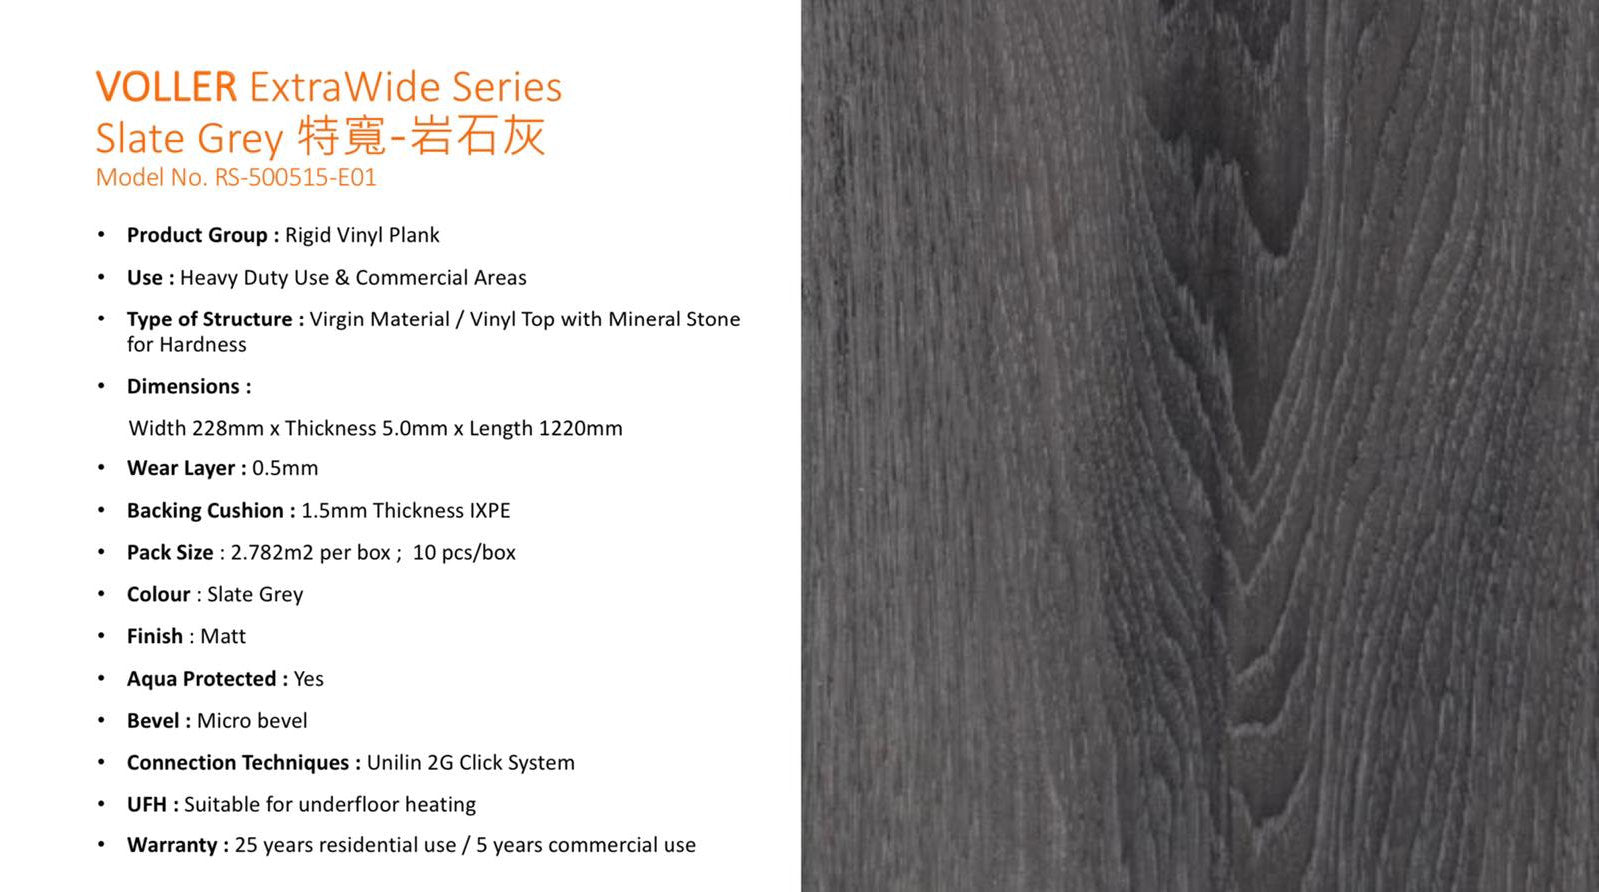 VOLLER Diamond RVP Flooring - Premium Extra Wide Series (Slate Grey) [29.94sqft/box]